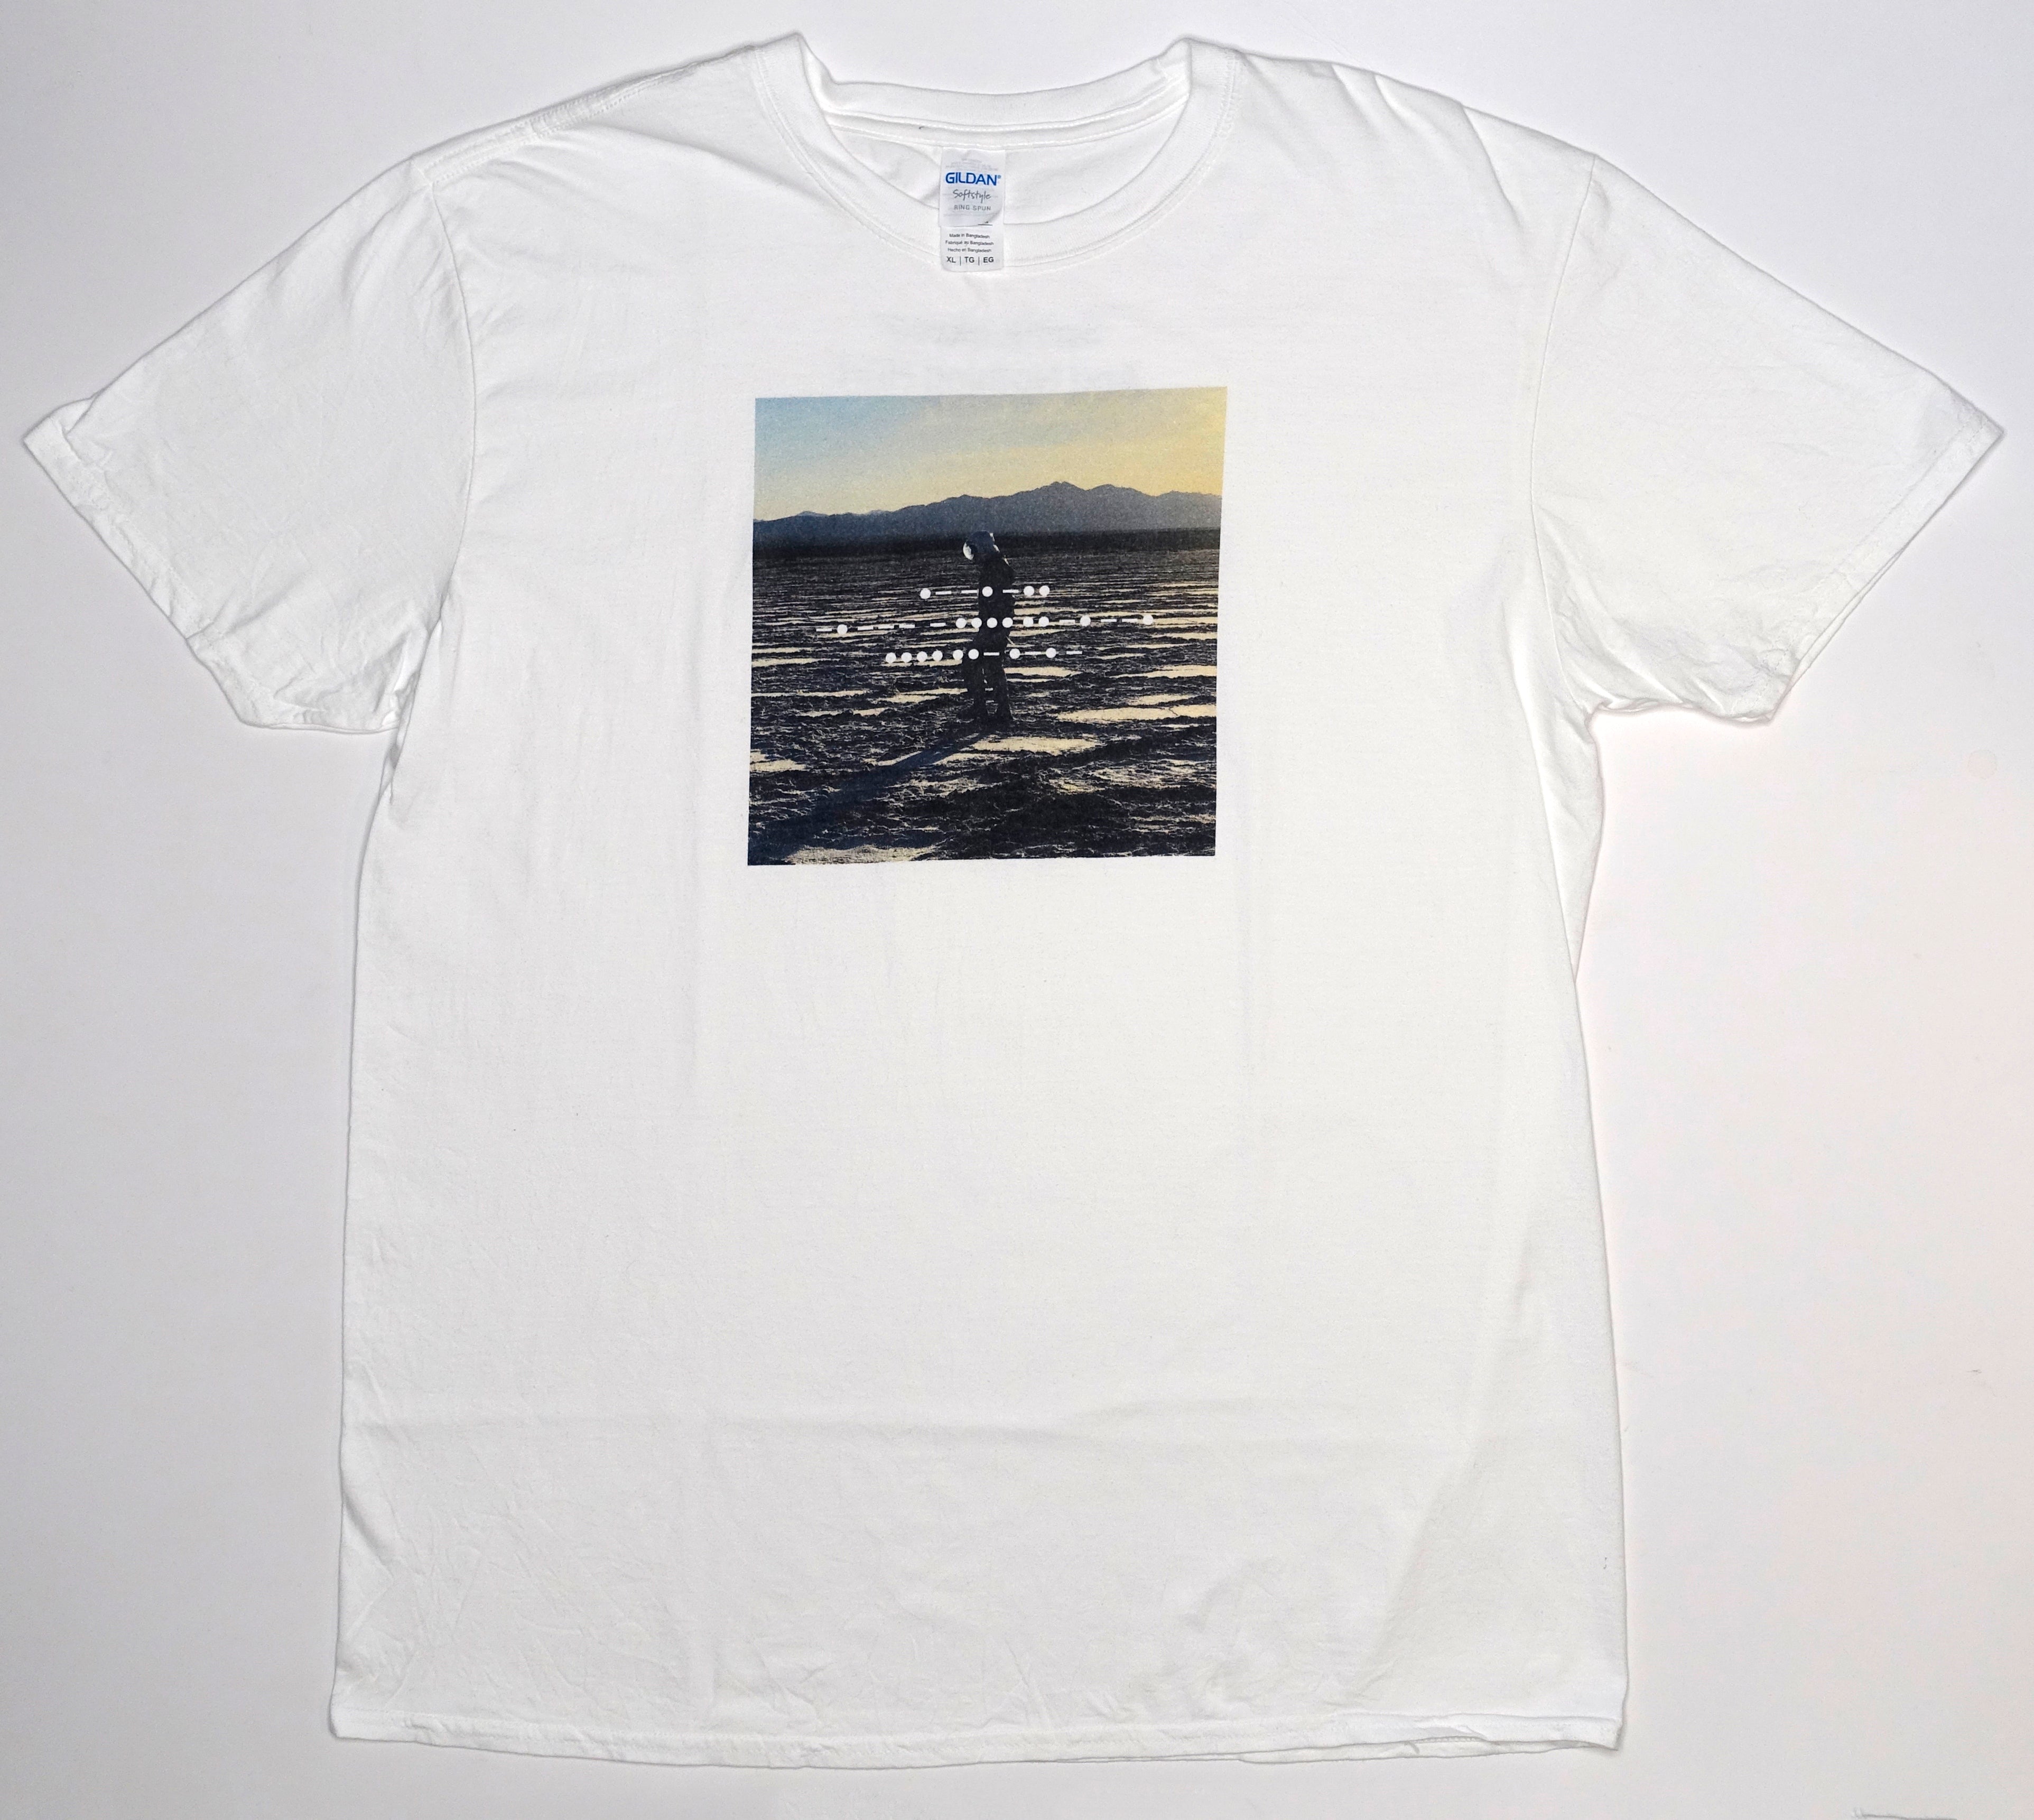 Spiritualized® - And Nothing Hurt Spacewalk 2018 Tour Shirt Size XL